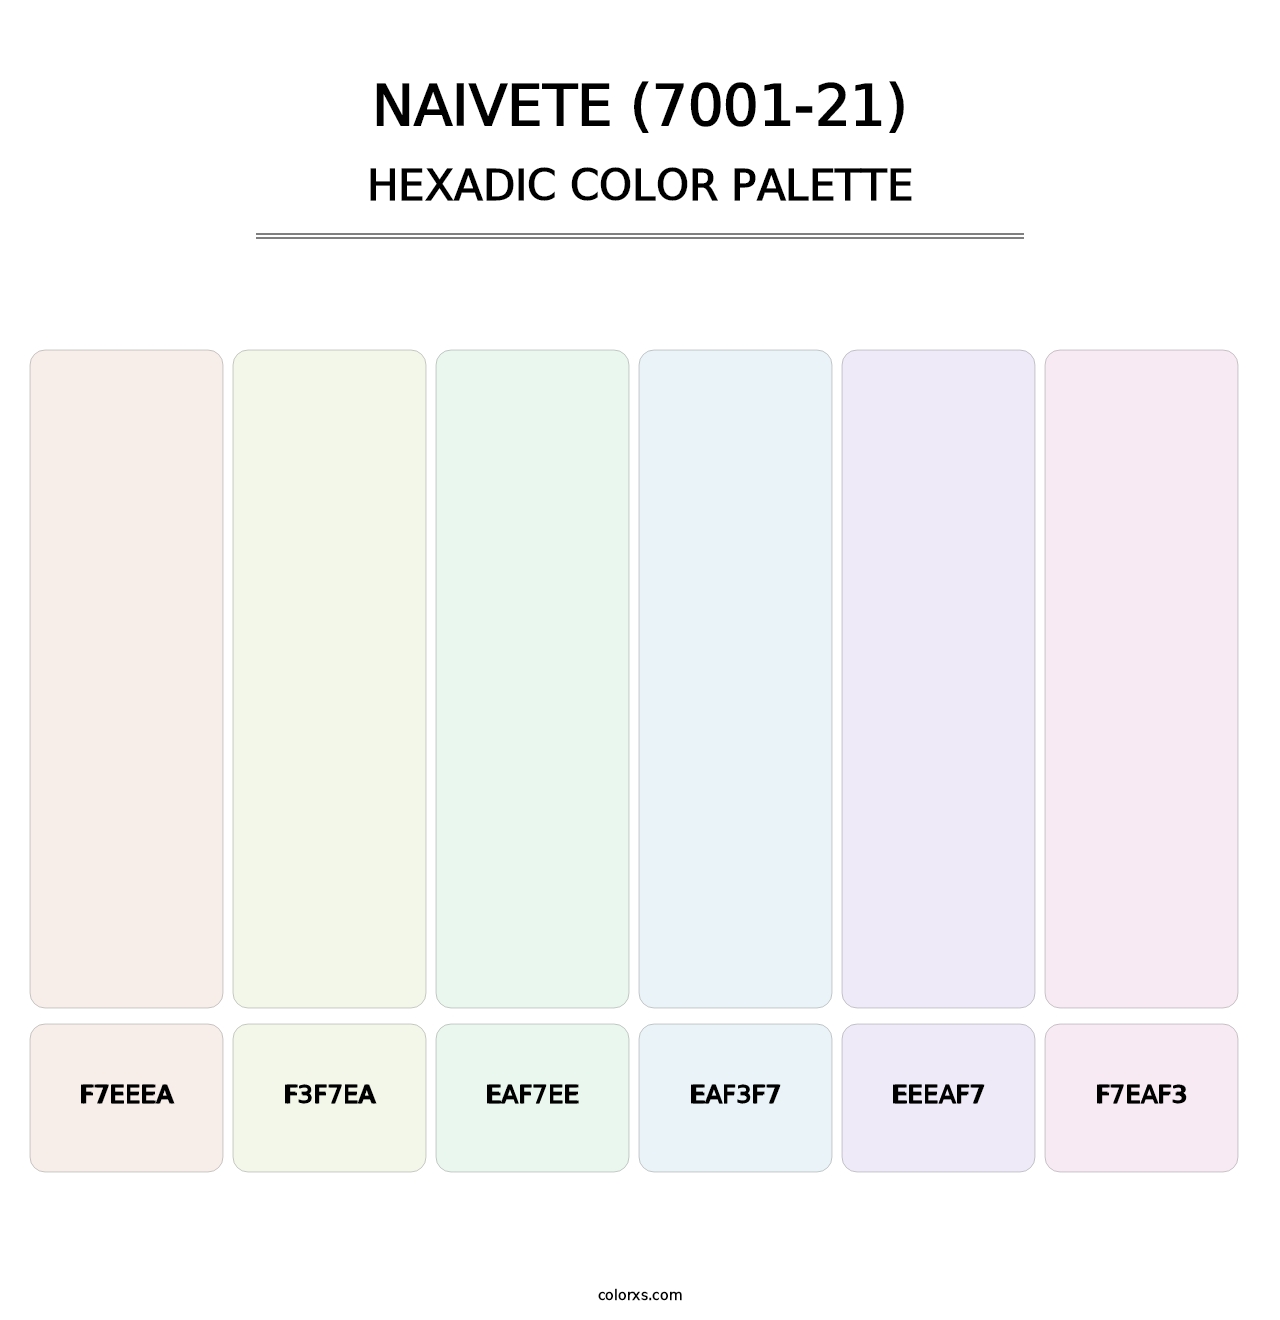 Naivete (7001-21) - Hexadic Color Palette